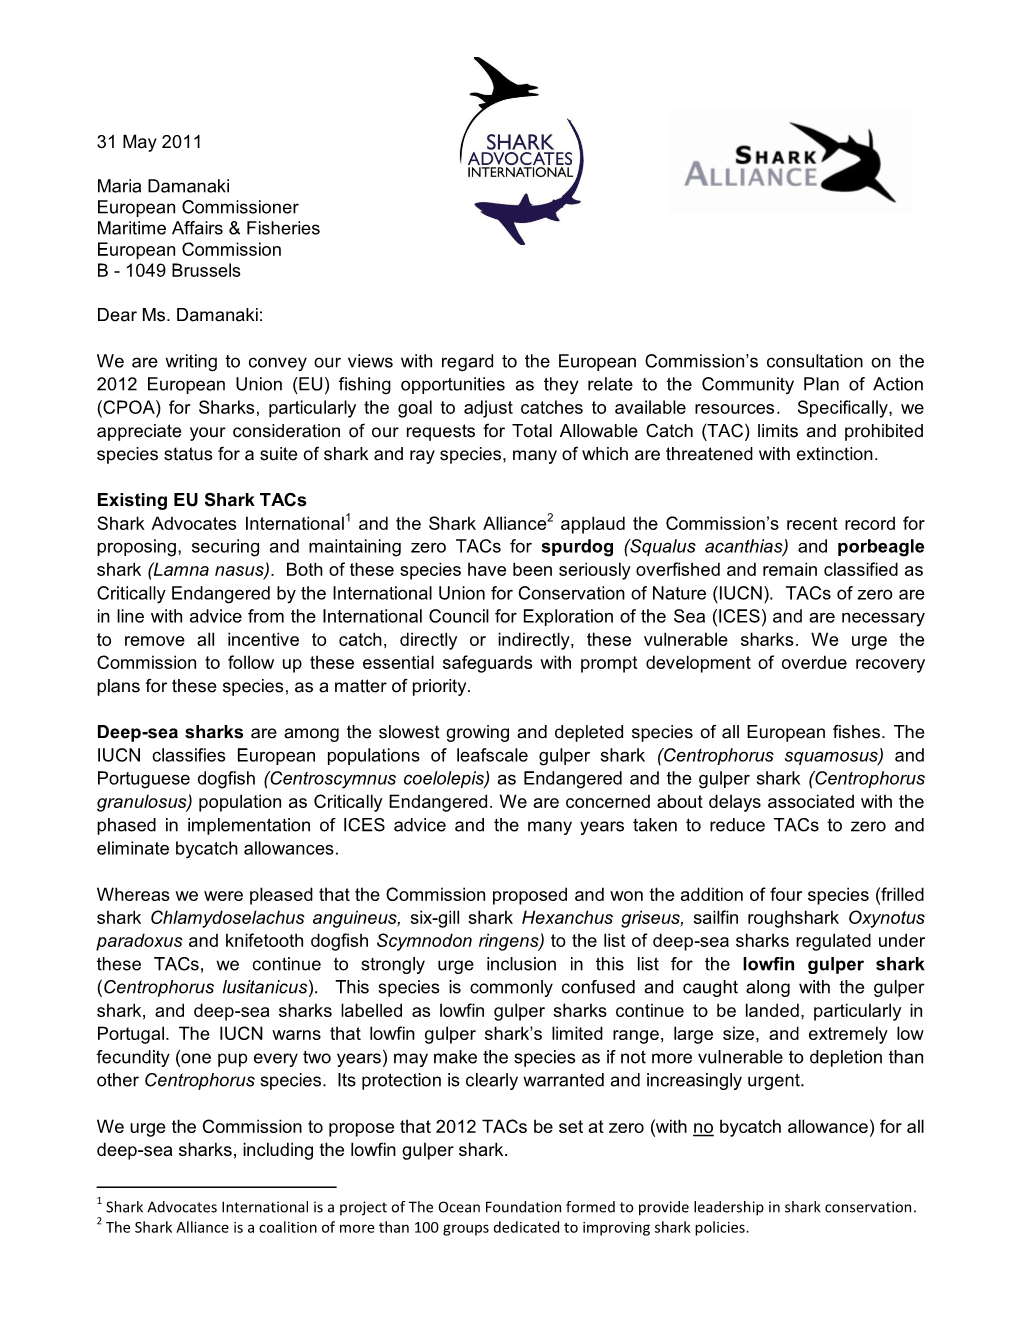 3. SAI-SA Letter on EU CPOA for Sharks / EU Tacs